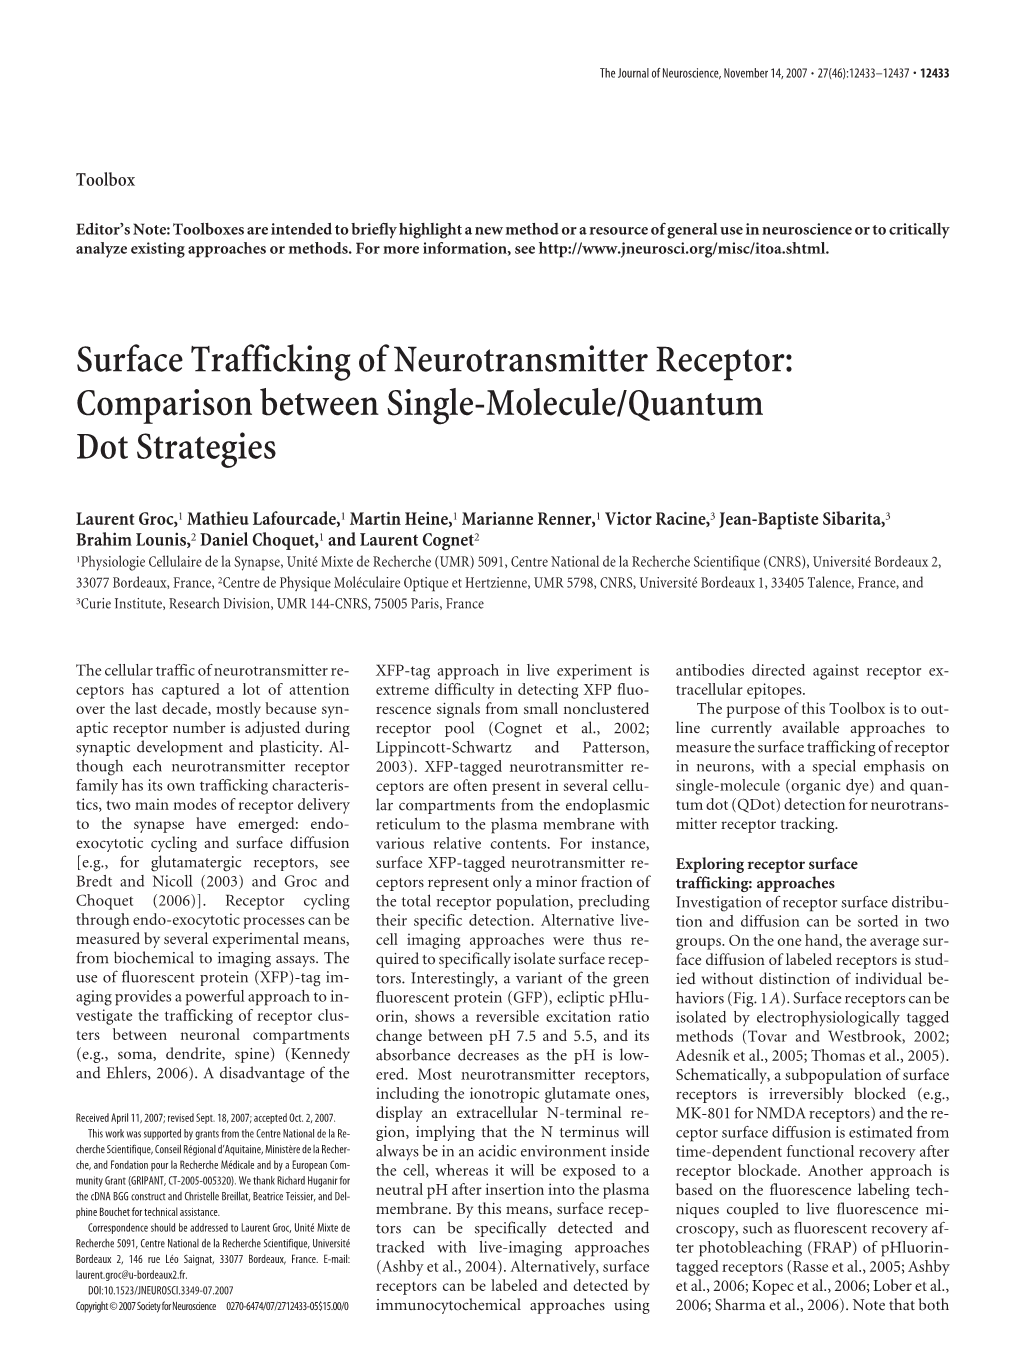 Surface Trafficking of Neurotransmitter Receptor: Comparison Between Single-Molecule/Quantum Dot Strategies